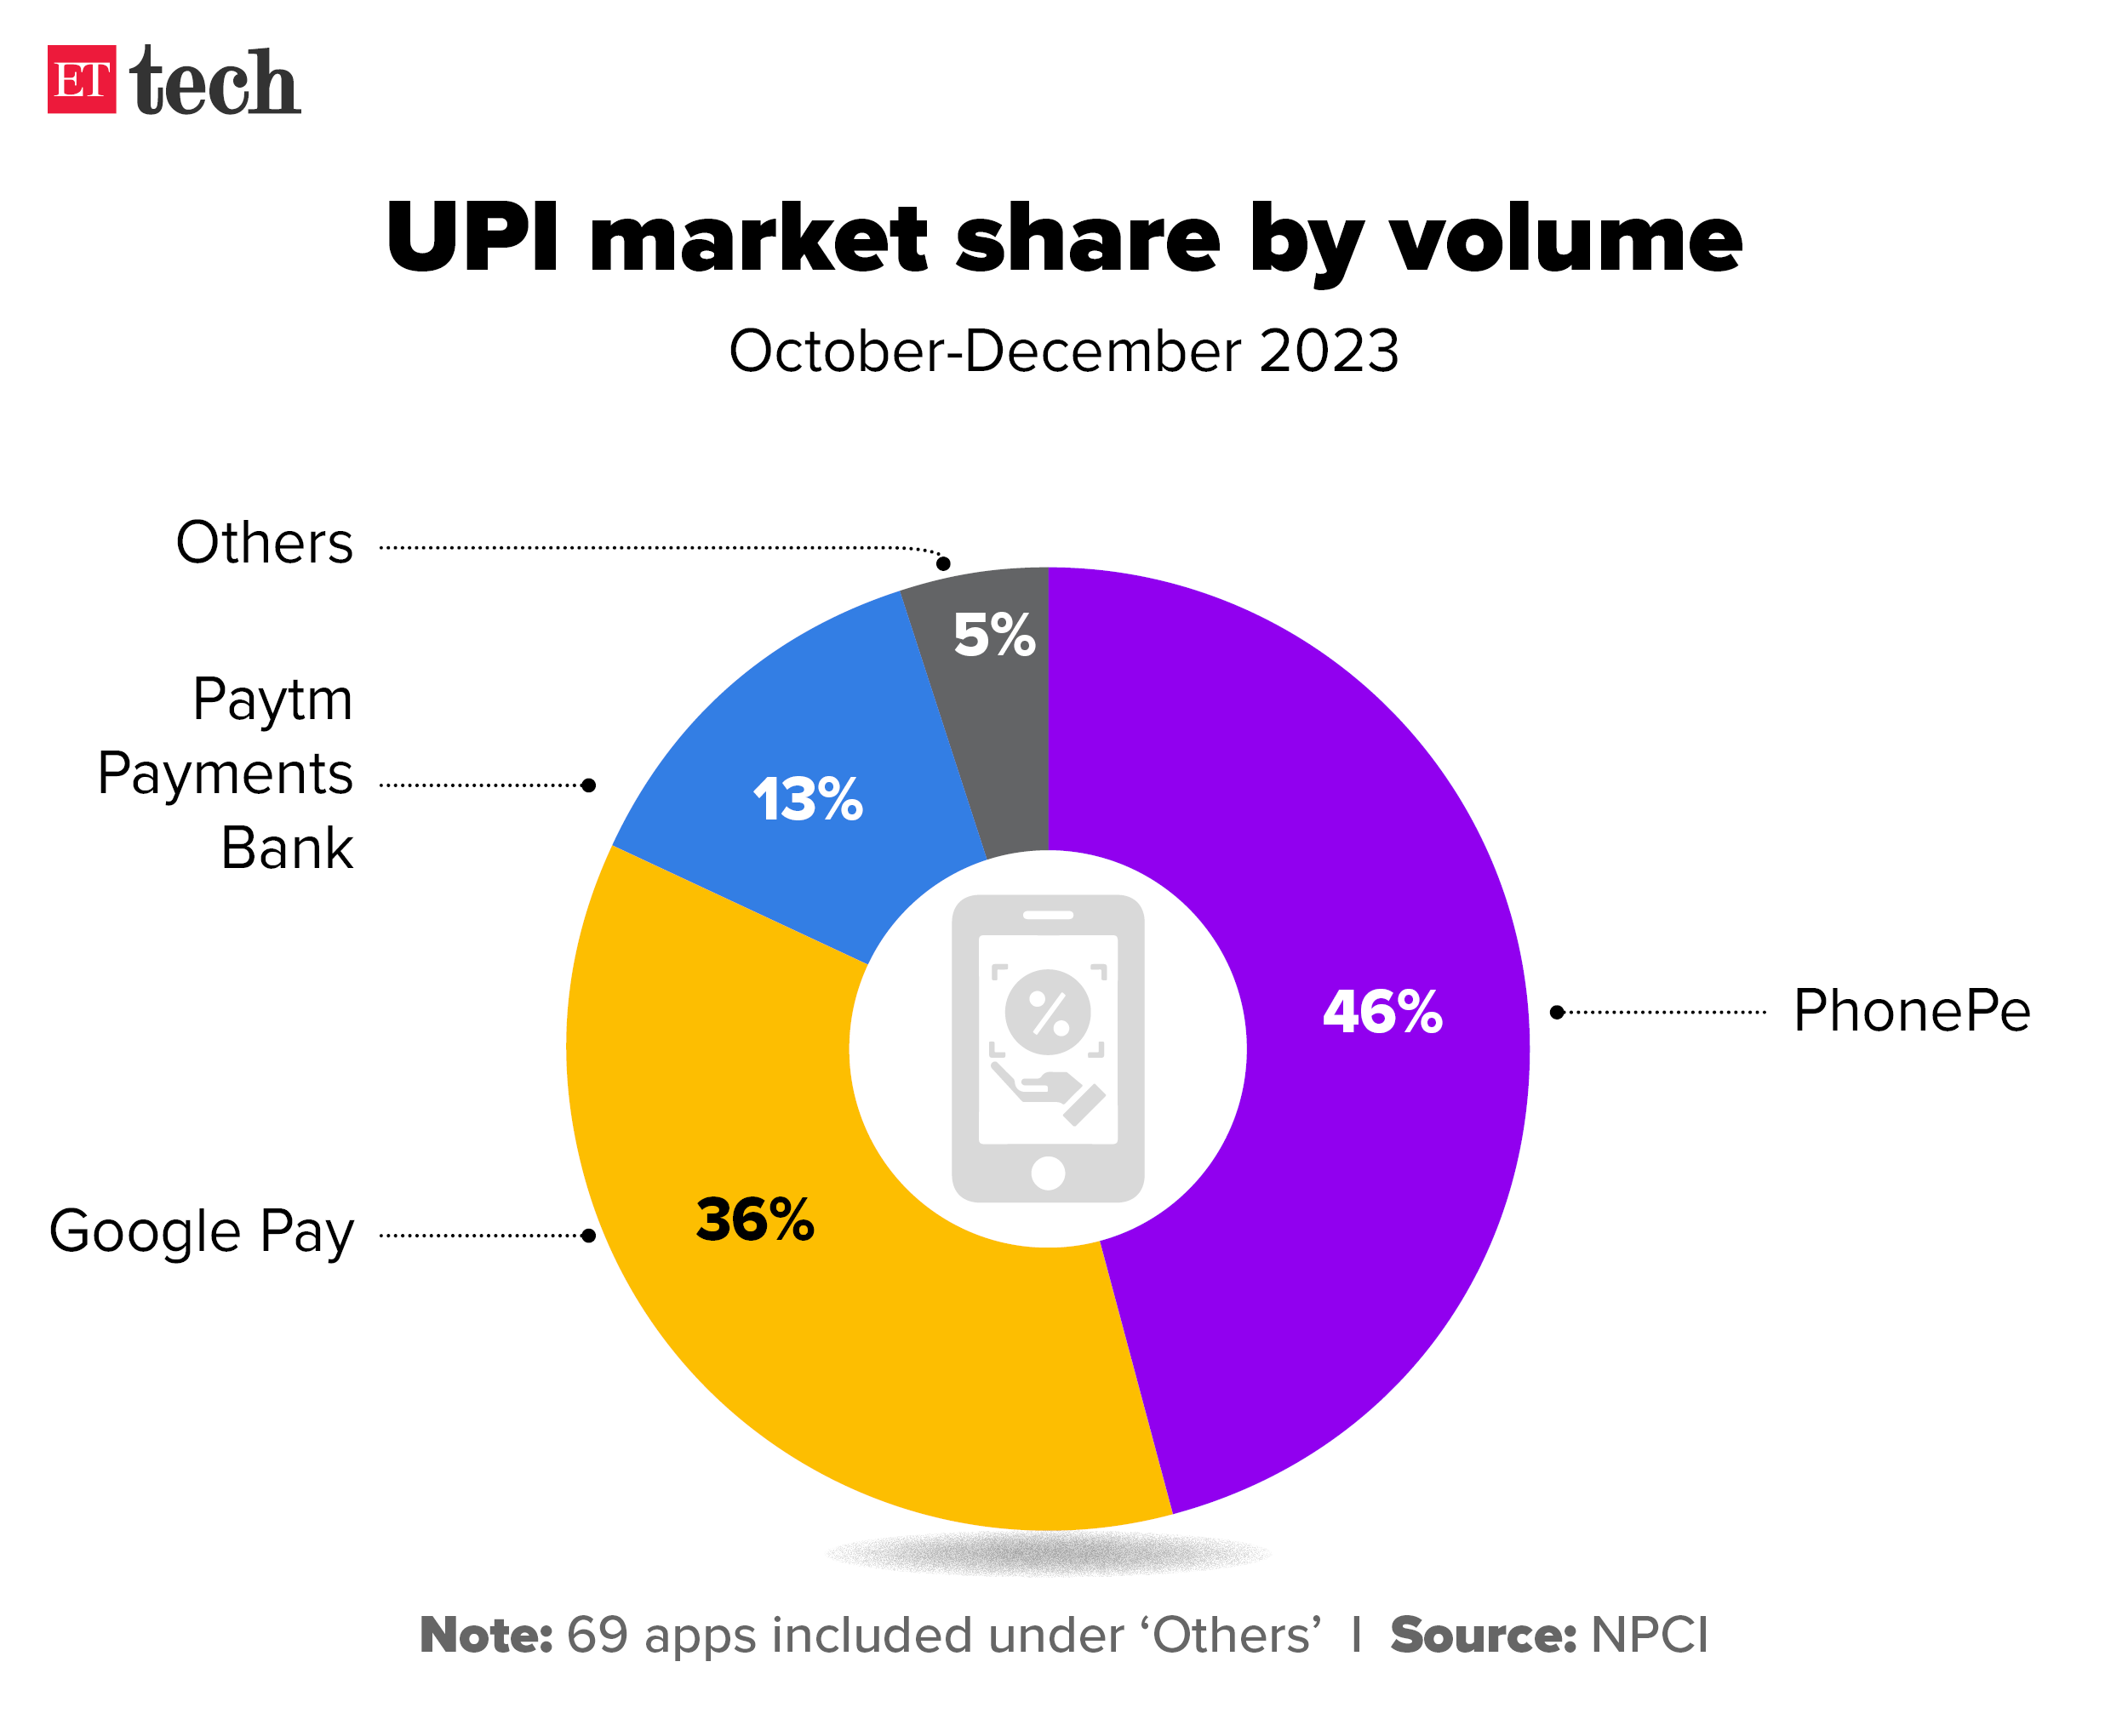 UPI market share by volume